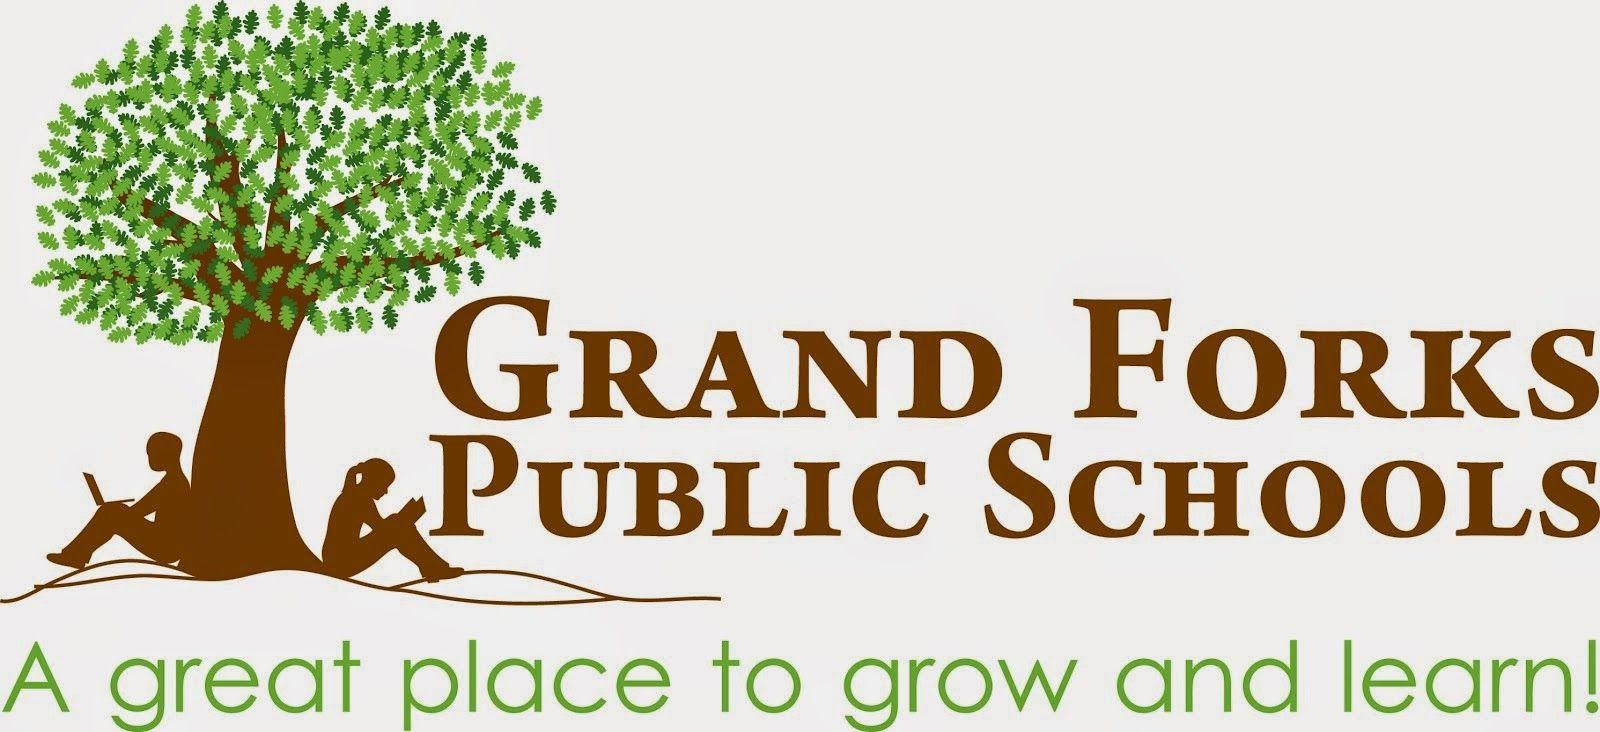 Gfps Logo - Grand Forks Public Schools Blog